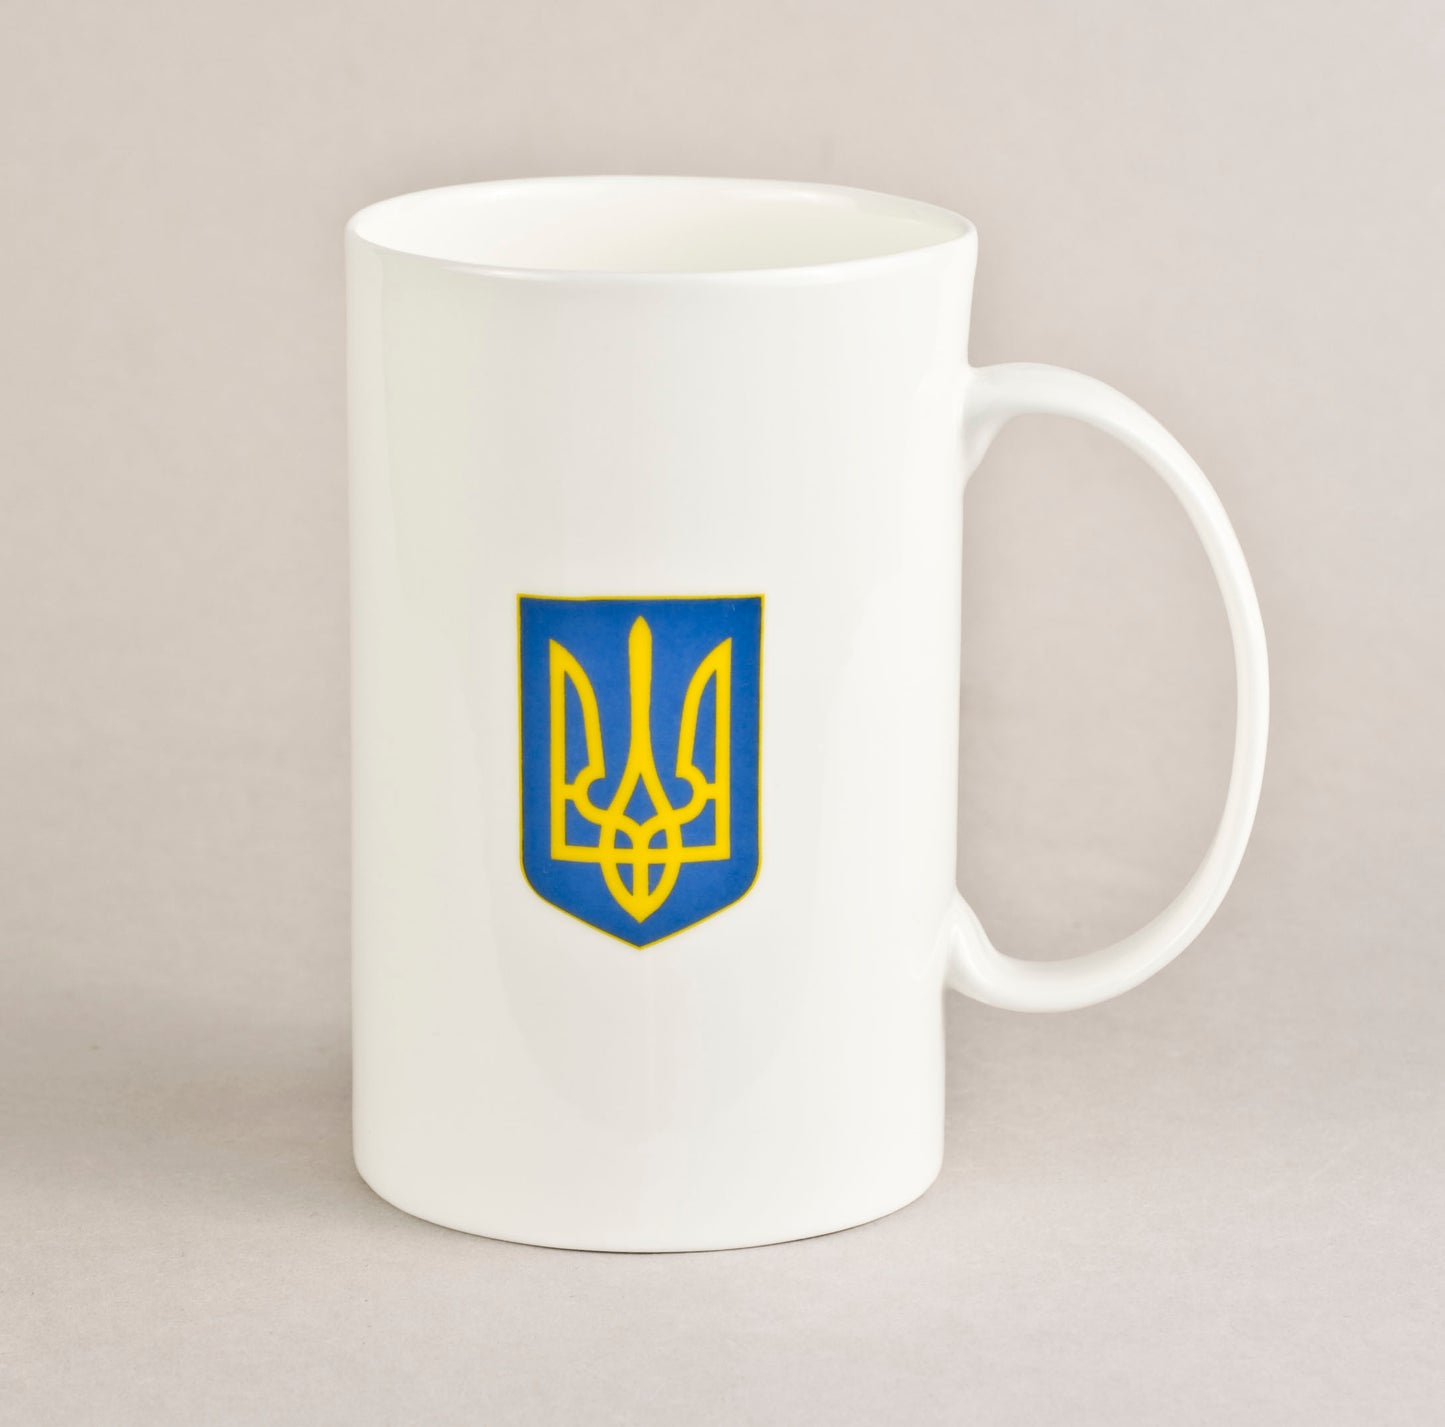 Ukraina. Medium mug 2